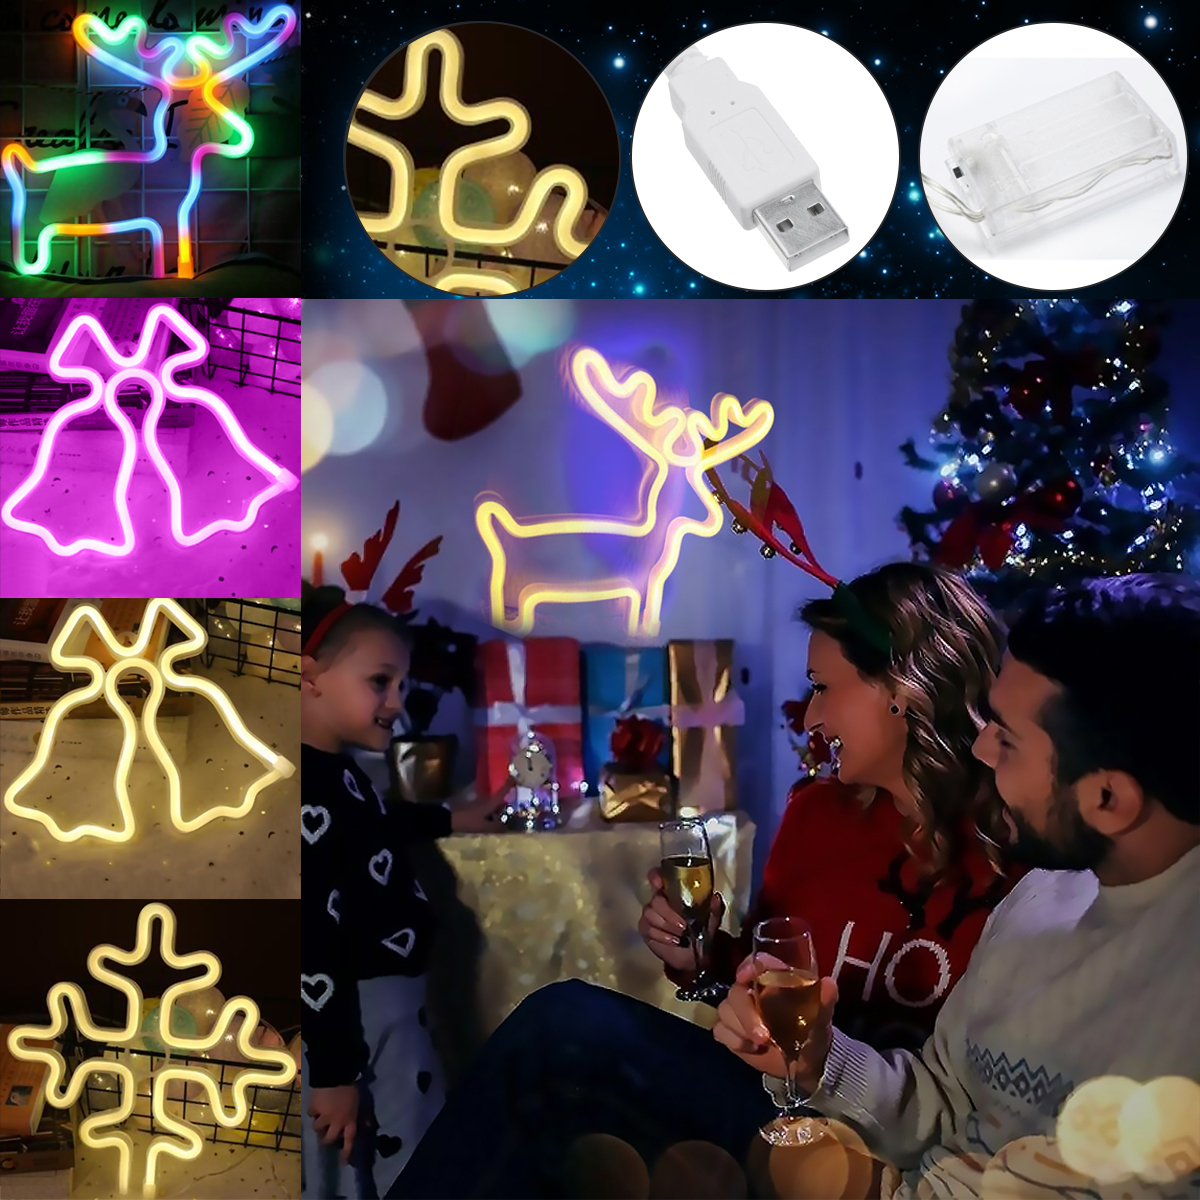 BatteryUSB-Neon-Light-Sign-LED-Lamp-Shaped-Night-Light-Art-Wall-Warm-Party-Christmas-Decoration-1800988-1